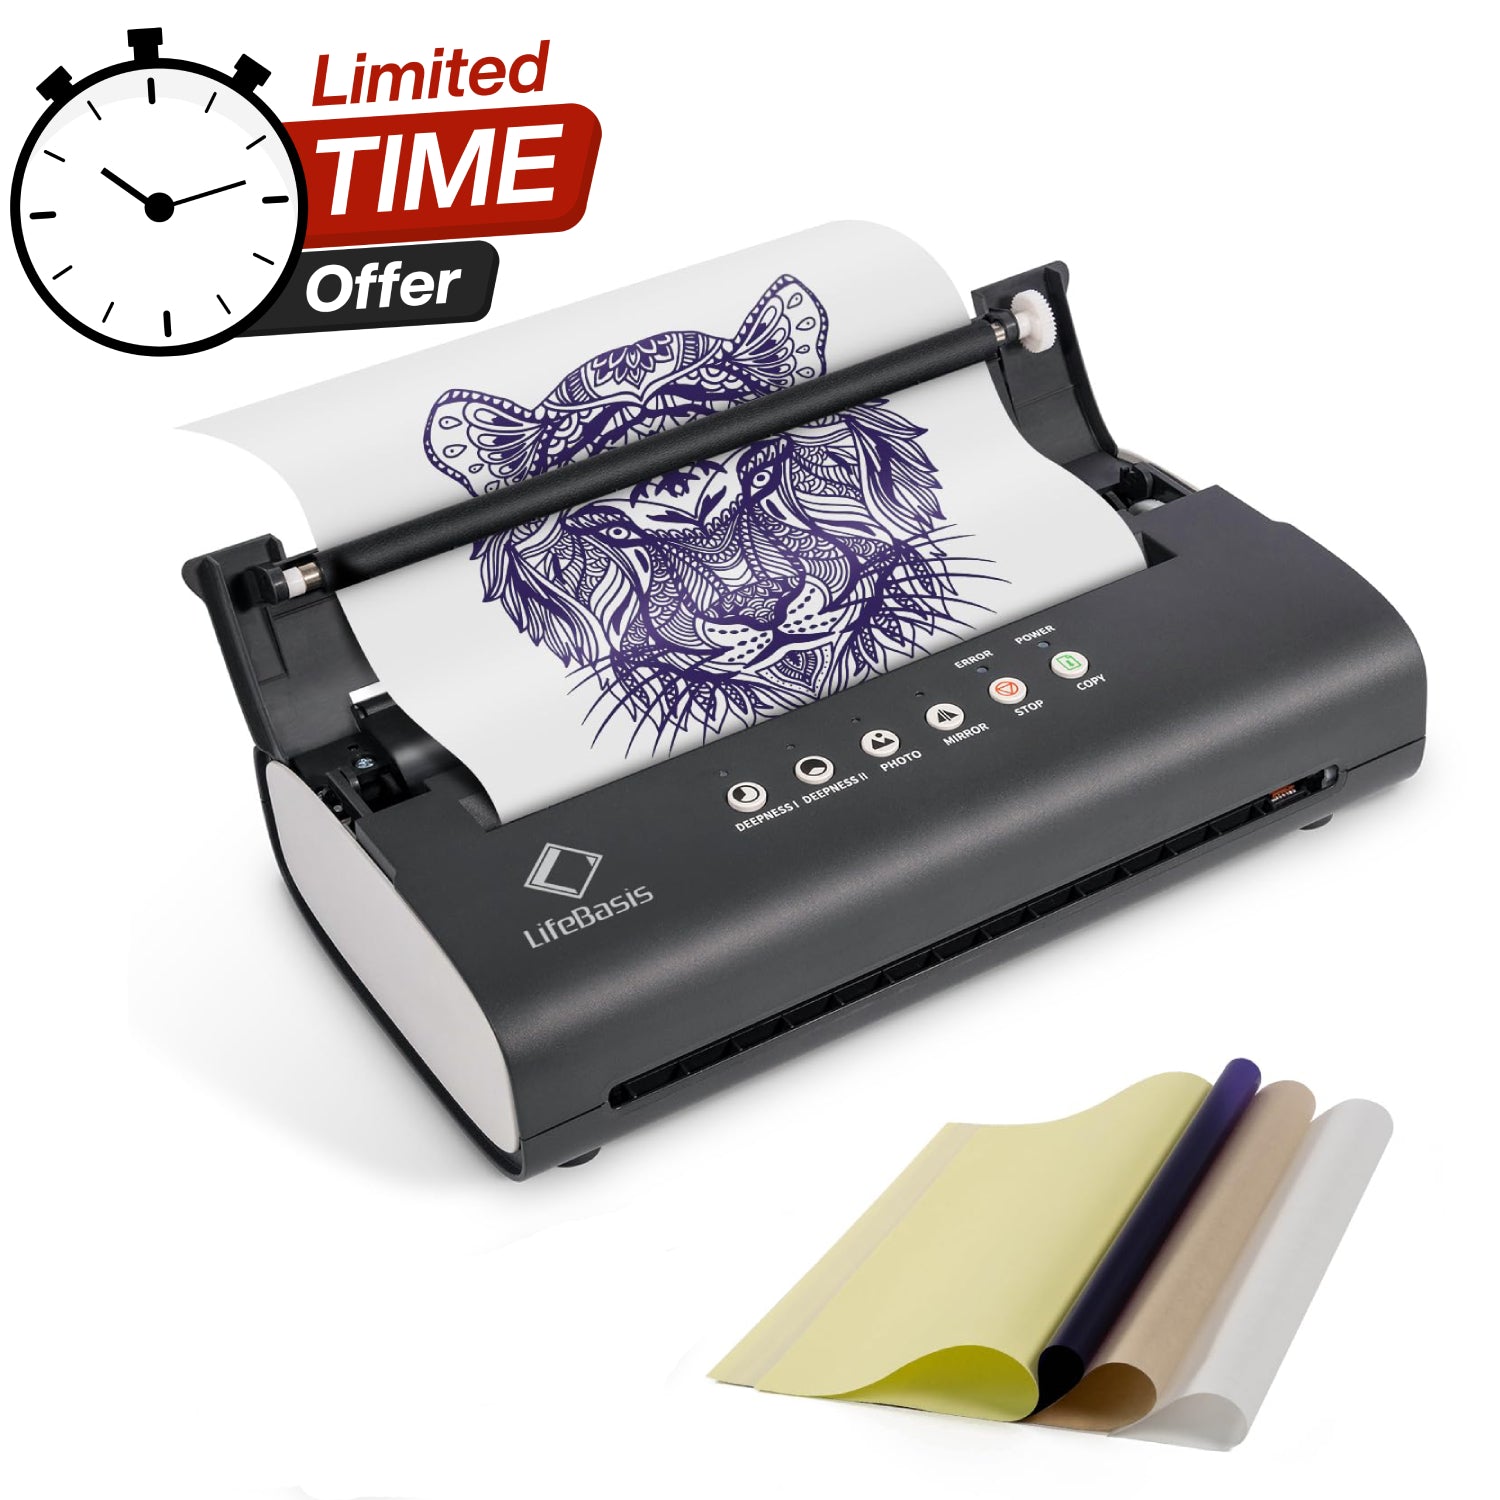 Tattoo Transfer Printer Machine Thermal Stencil Copier Printer for